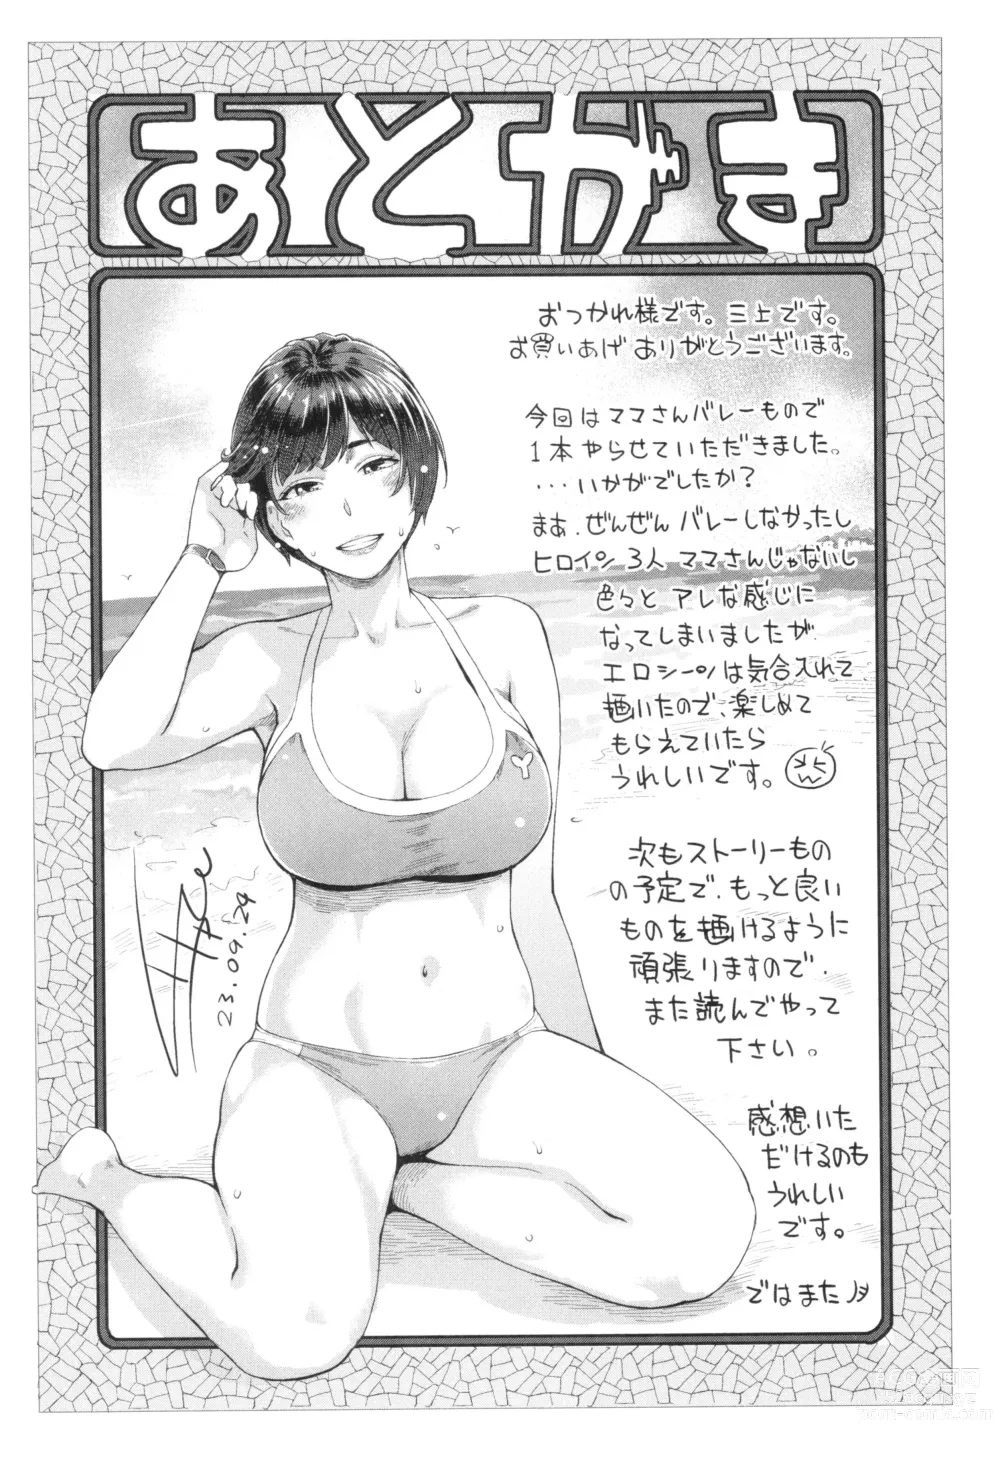 Page 192 of manga Hoshigaoka Star Volley